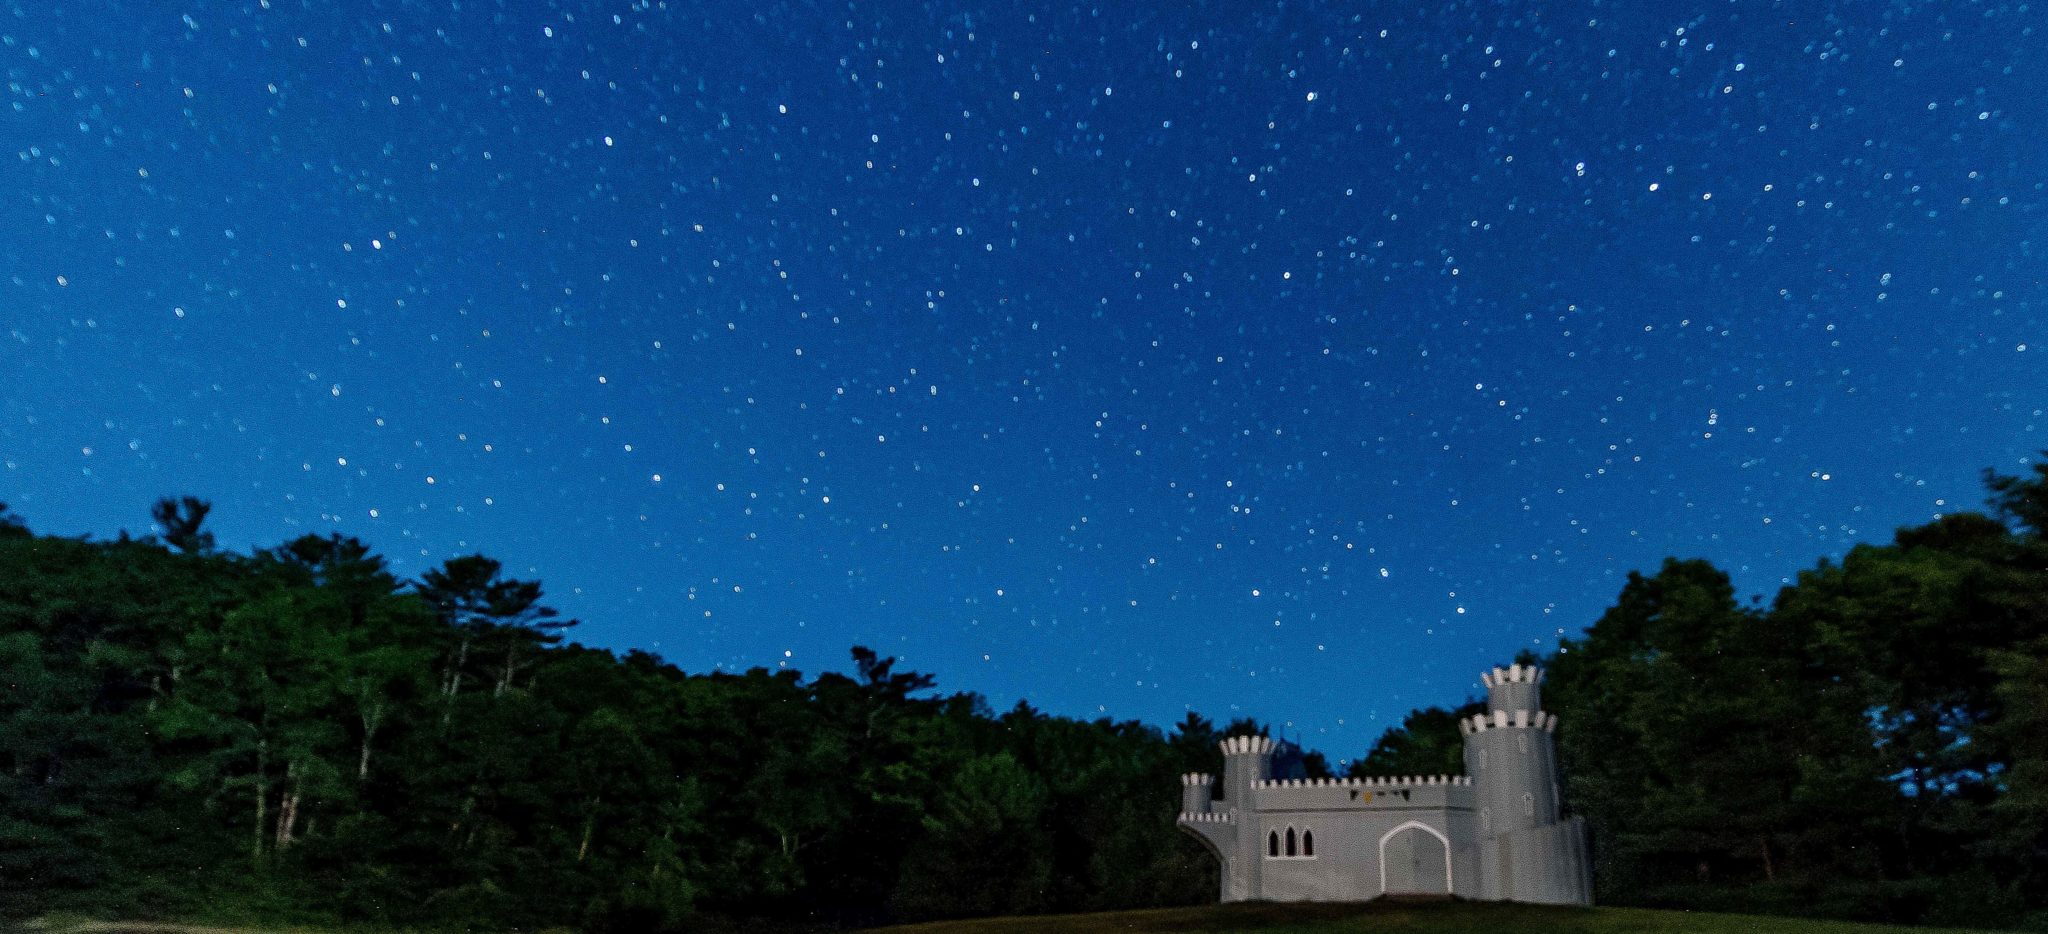 Lanakila's blue wooden castle underneath a nightsky full of stars.